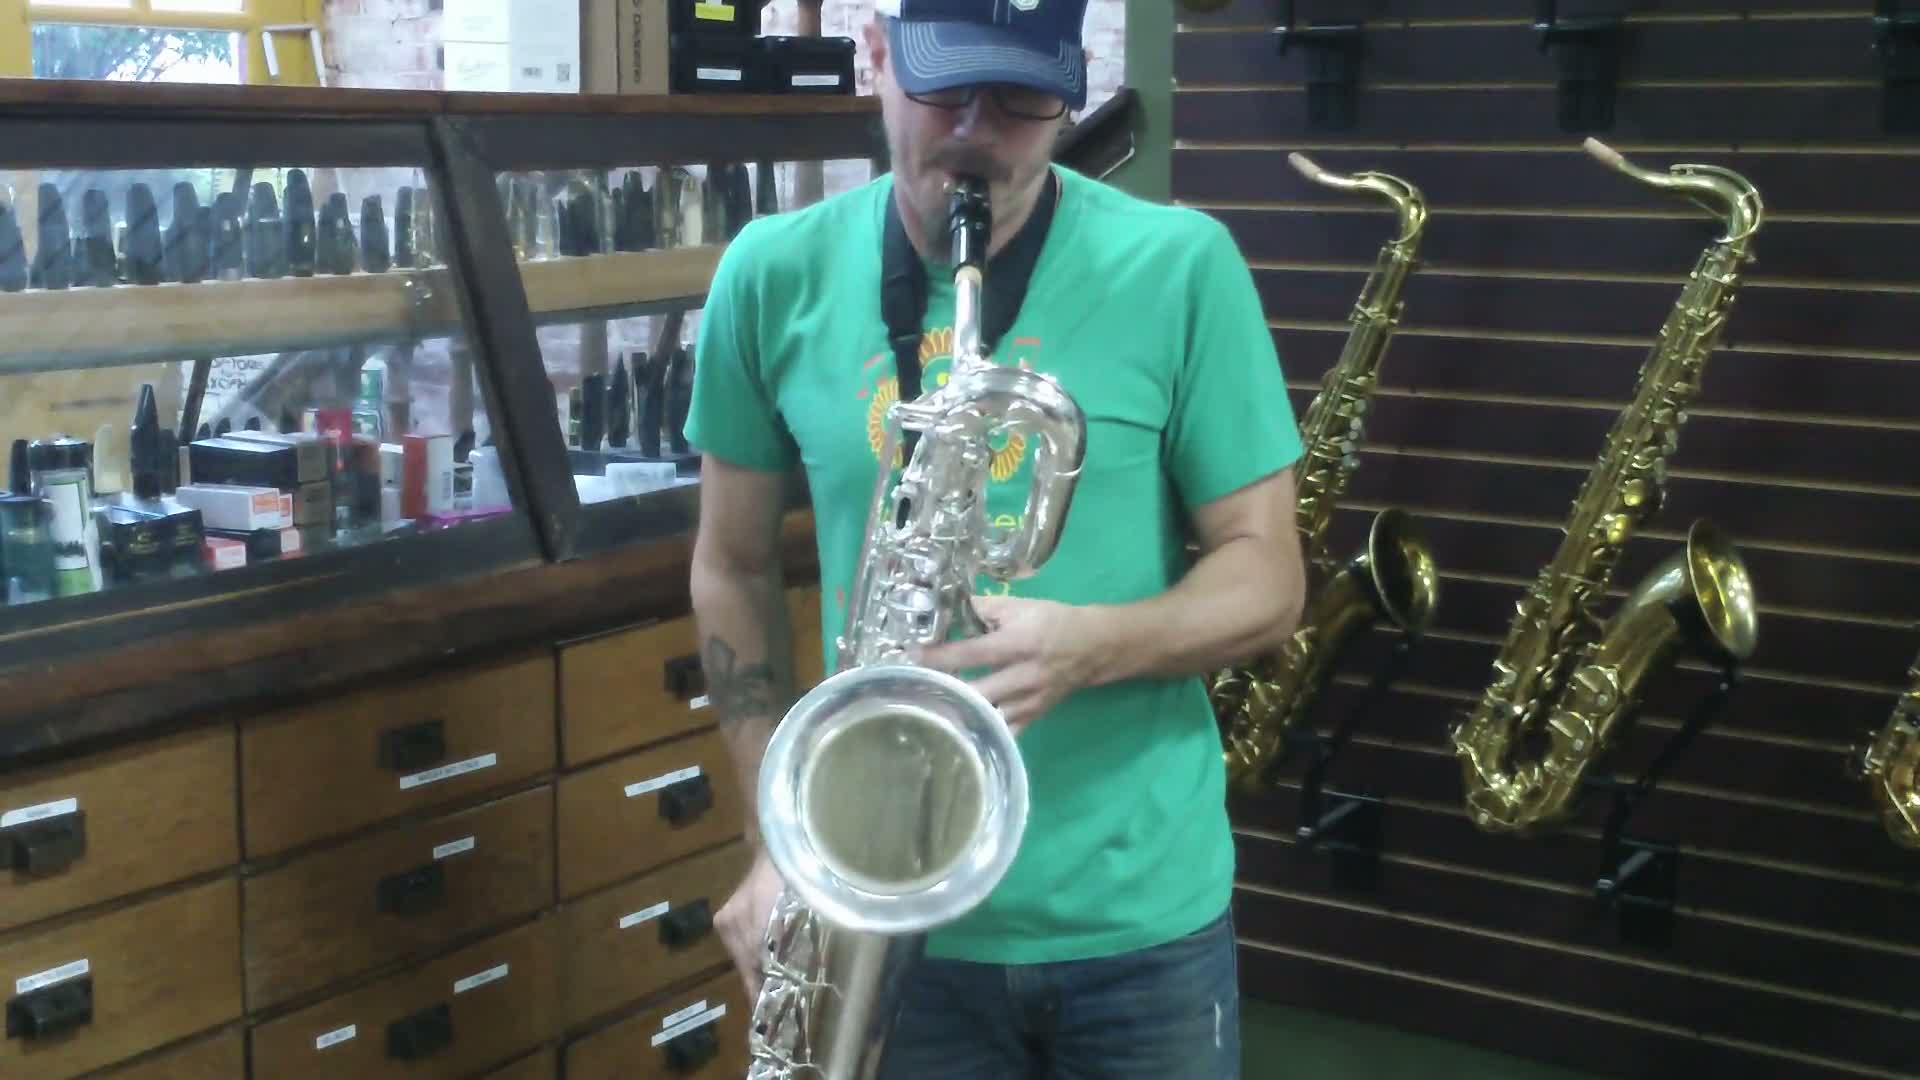 Yamaha YBS62 Professional Baritone Saxophone – Alto Music